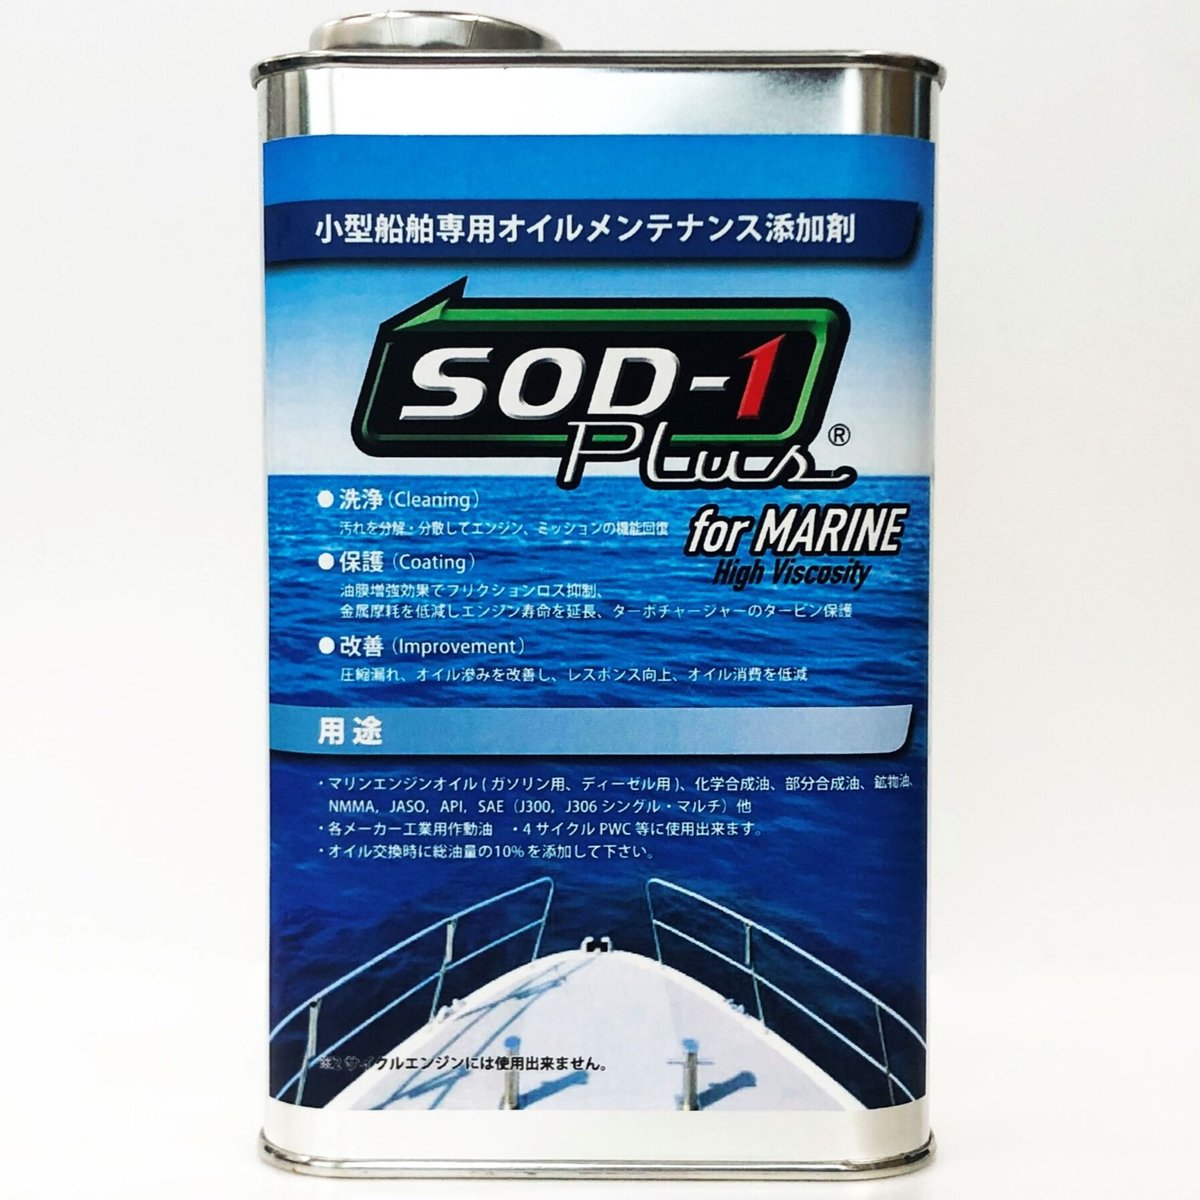 【1L缶】D-1ケミカル SOD-1 PLUS for マリン